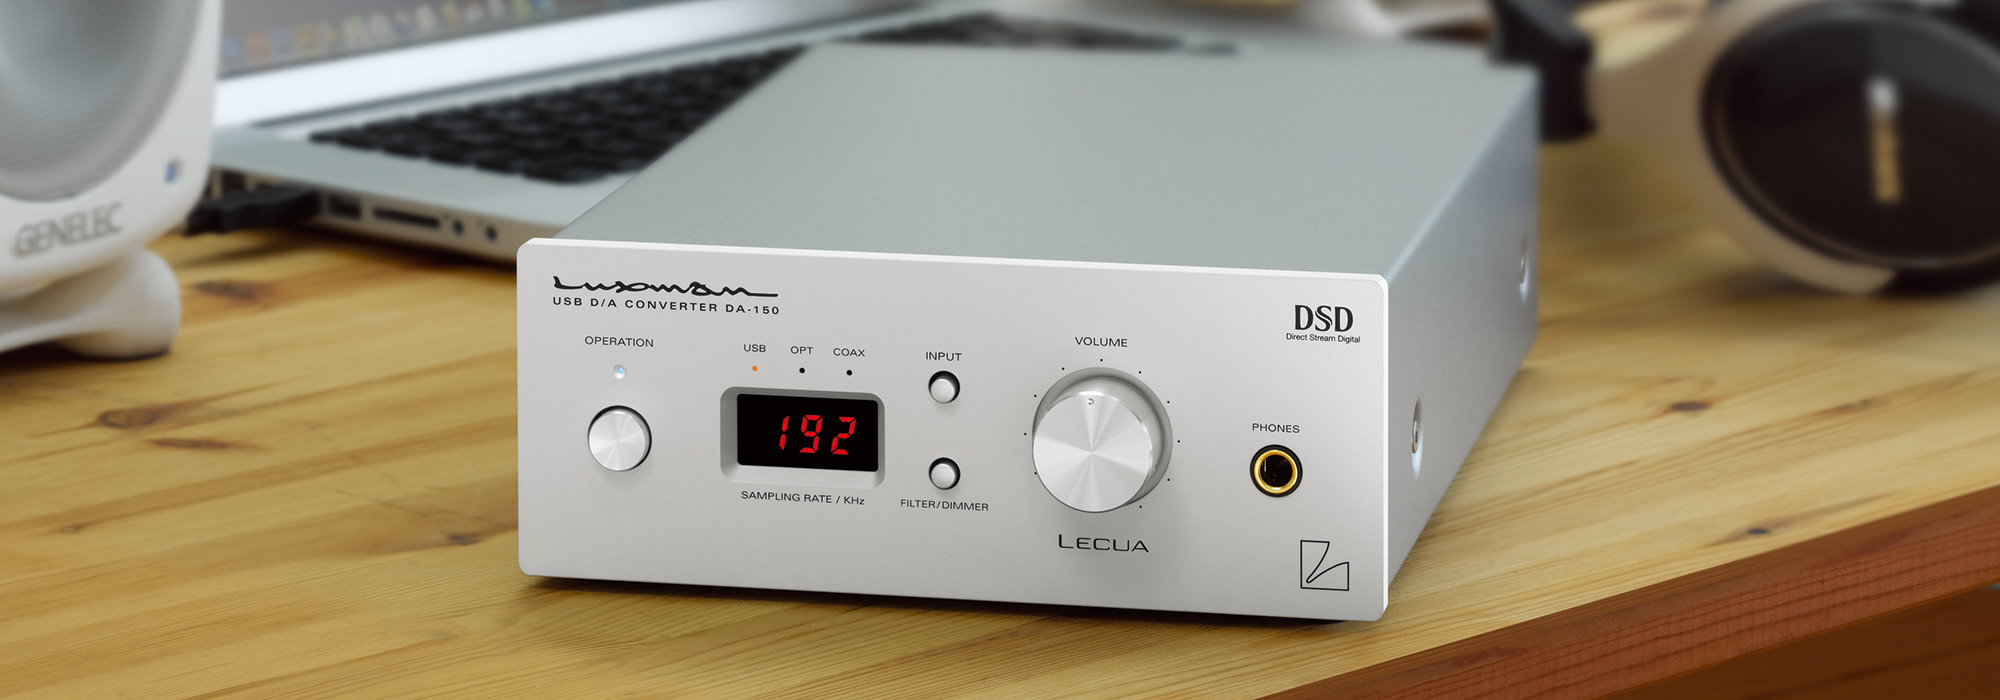 DA-150 | USB D/A CONVERTERS | PRODUCTS | LUXMAN | Seeking higher 